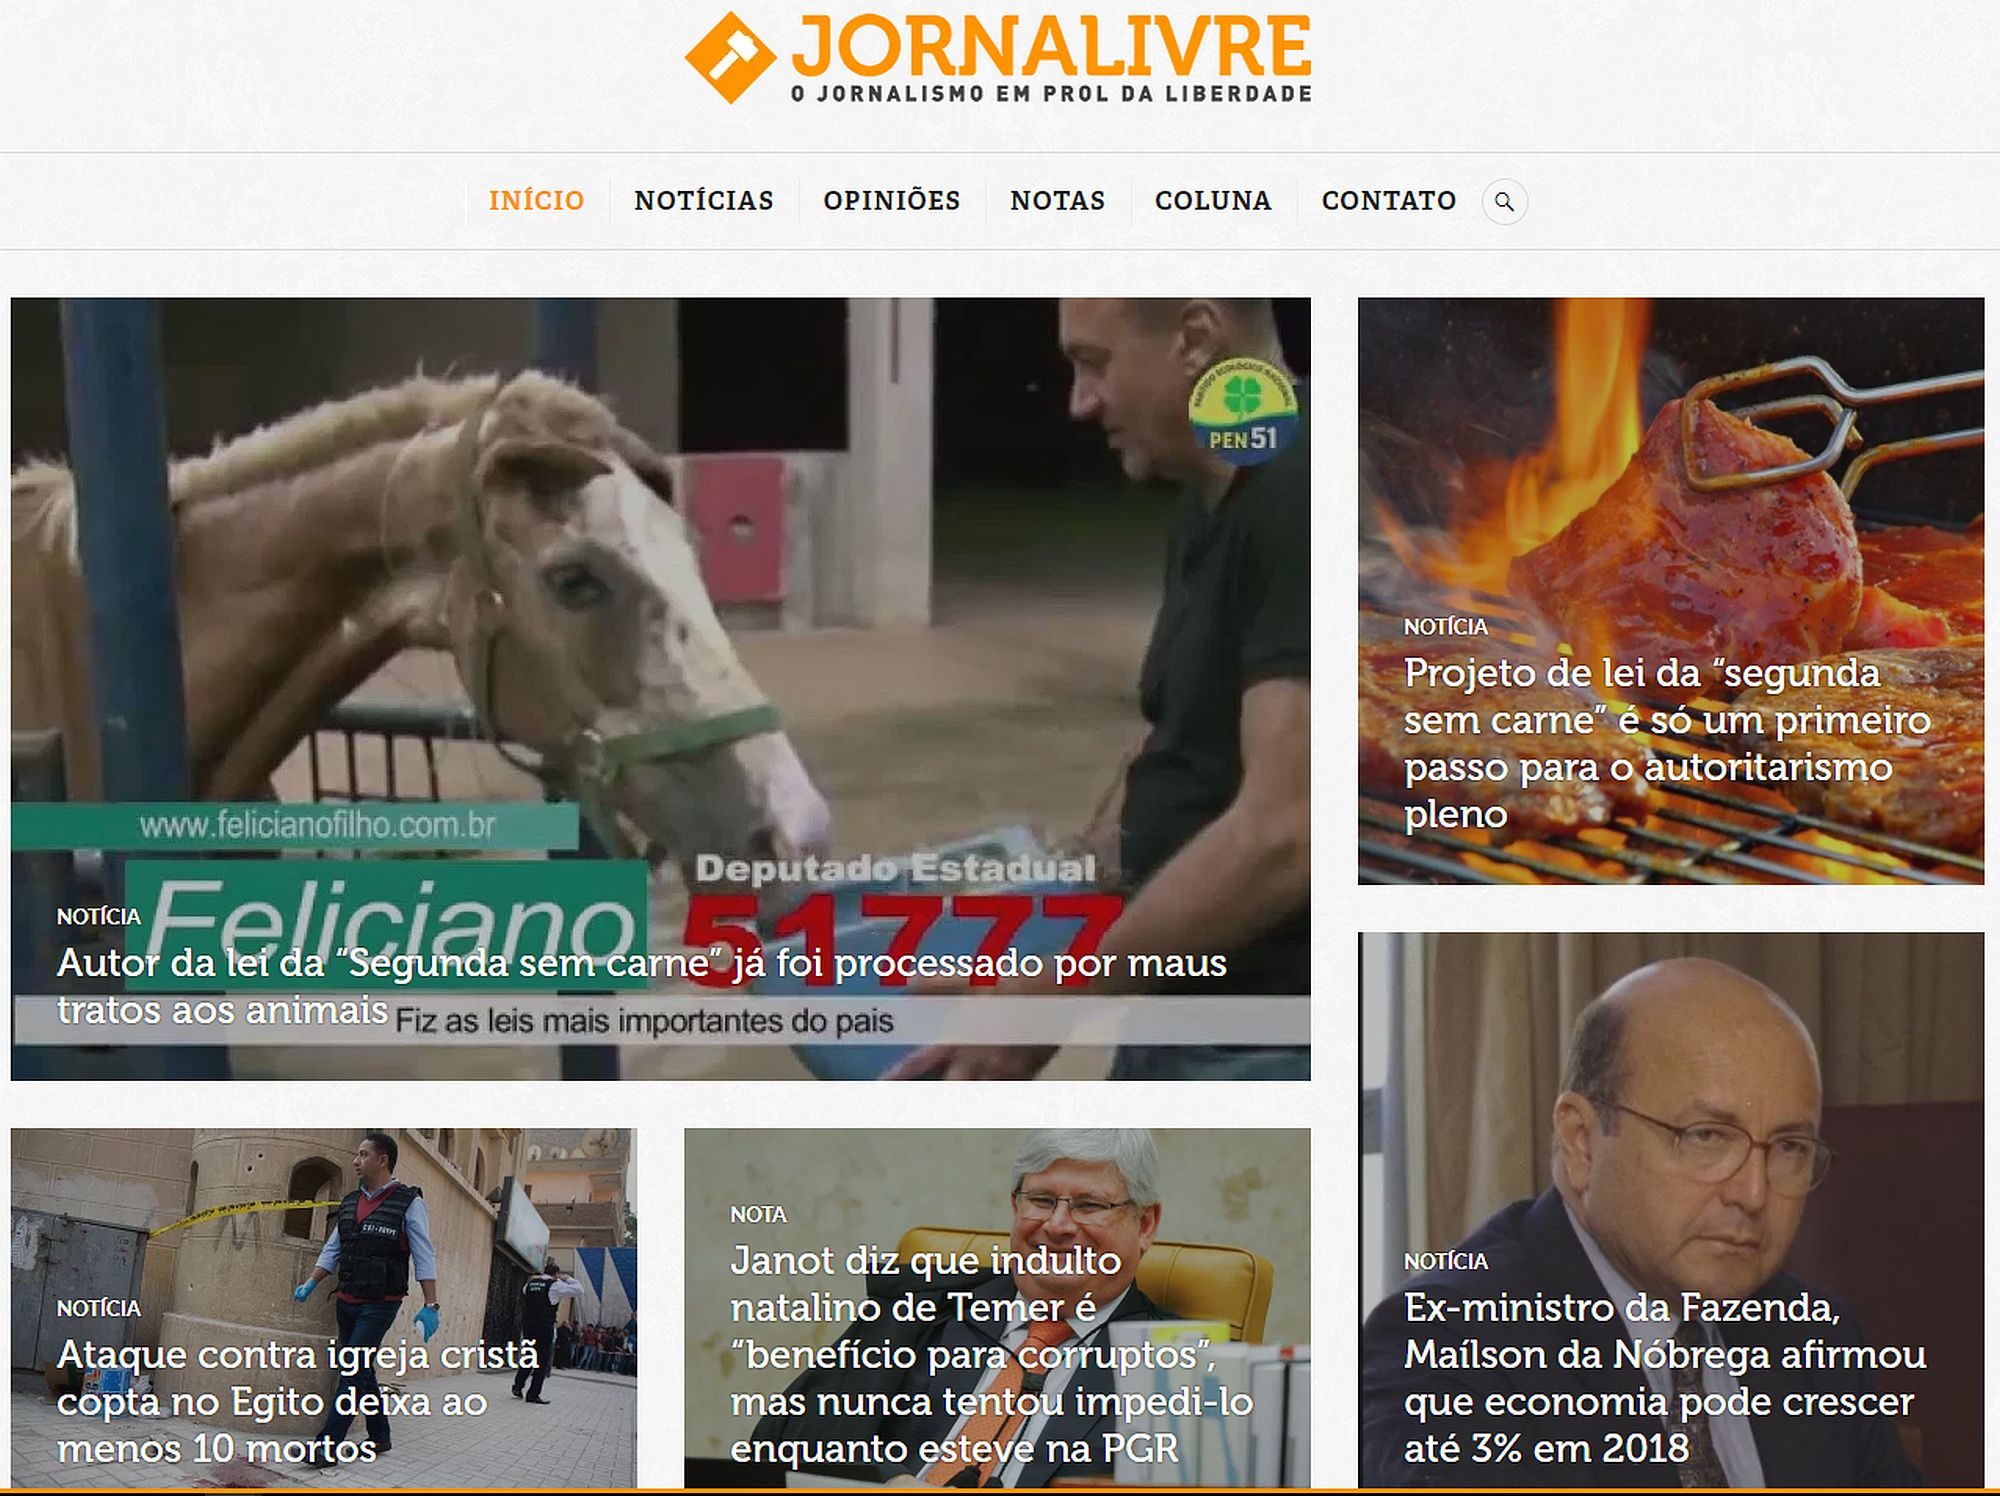 Jornalivre is a notorious fake news disseminator in Brazil